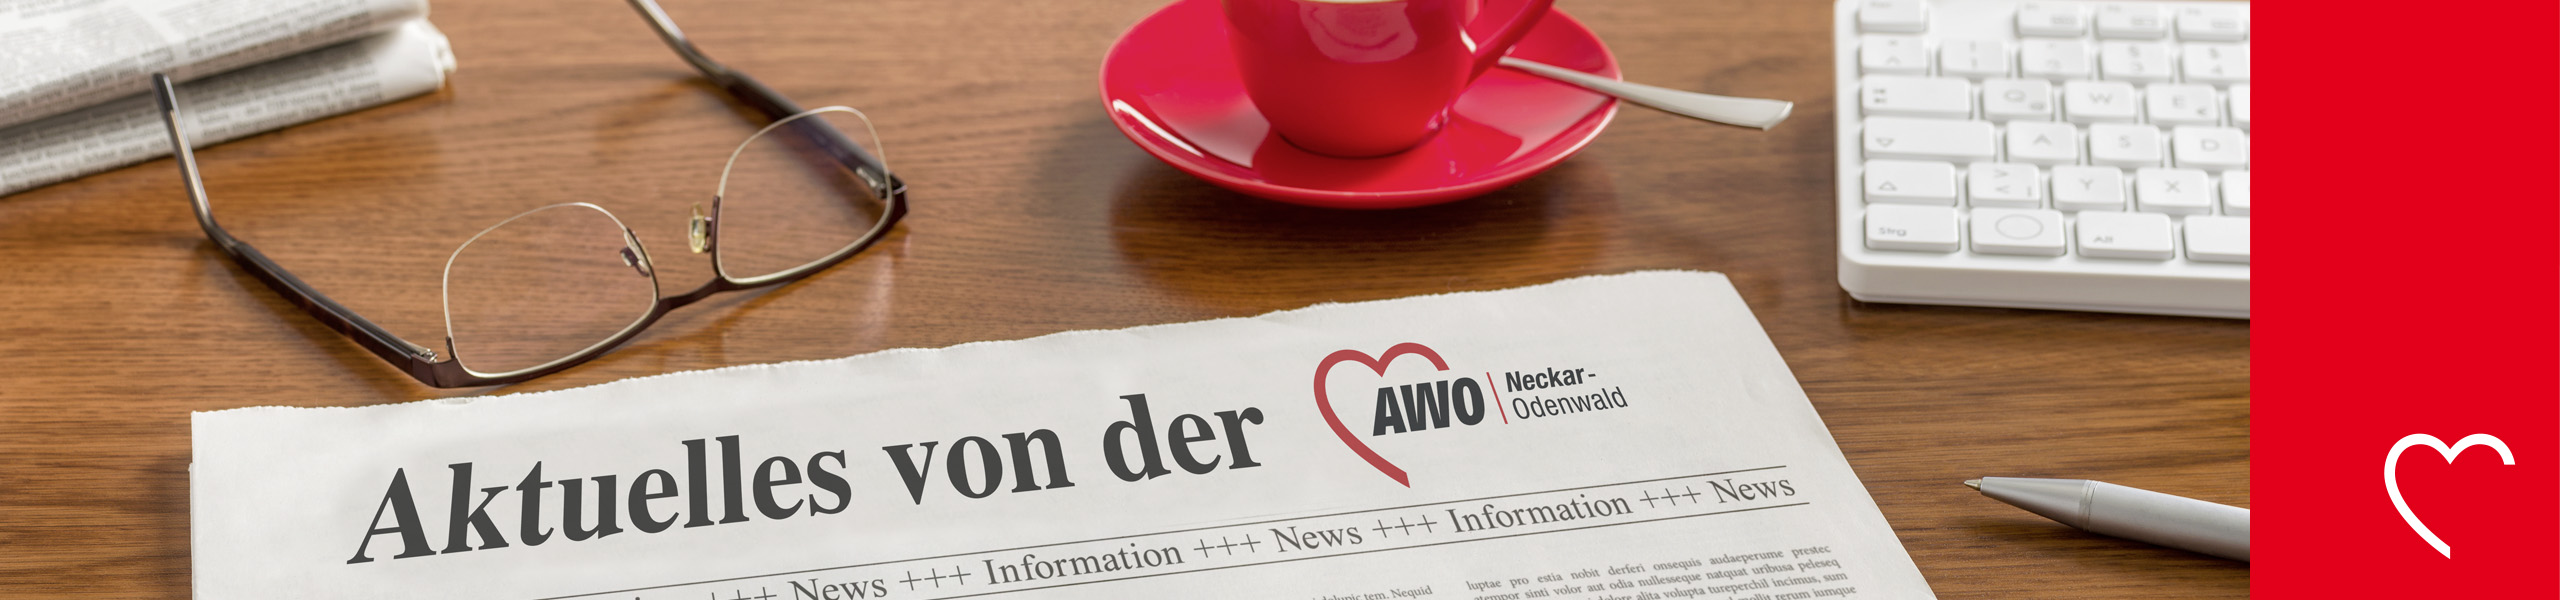 AWO Neckar-Odenwald gGmbH - AWO Neckar-Odenwald wählt neuen Kreisvorstand